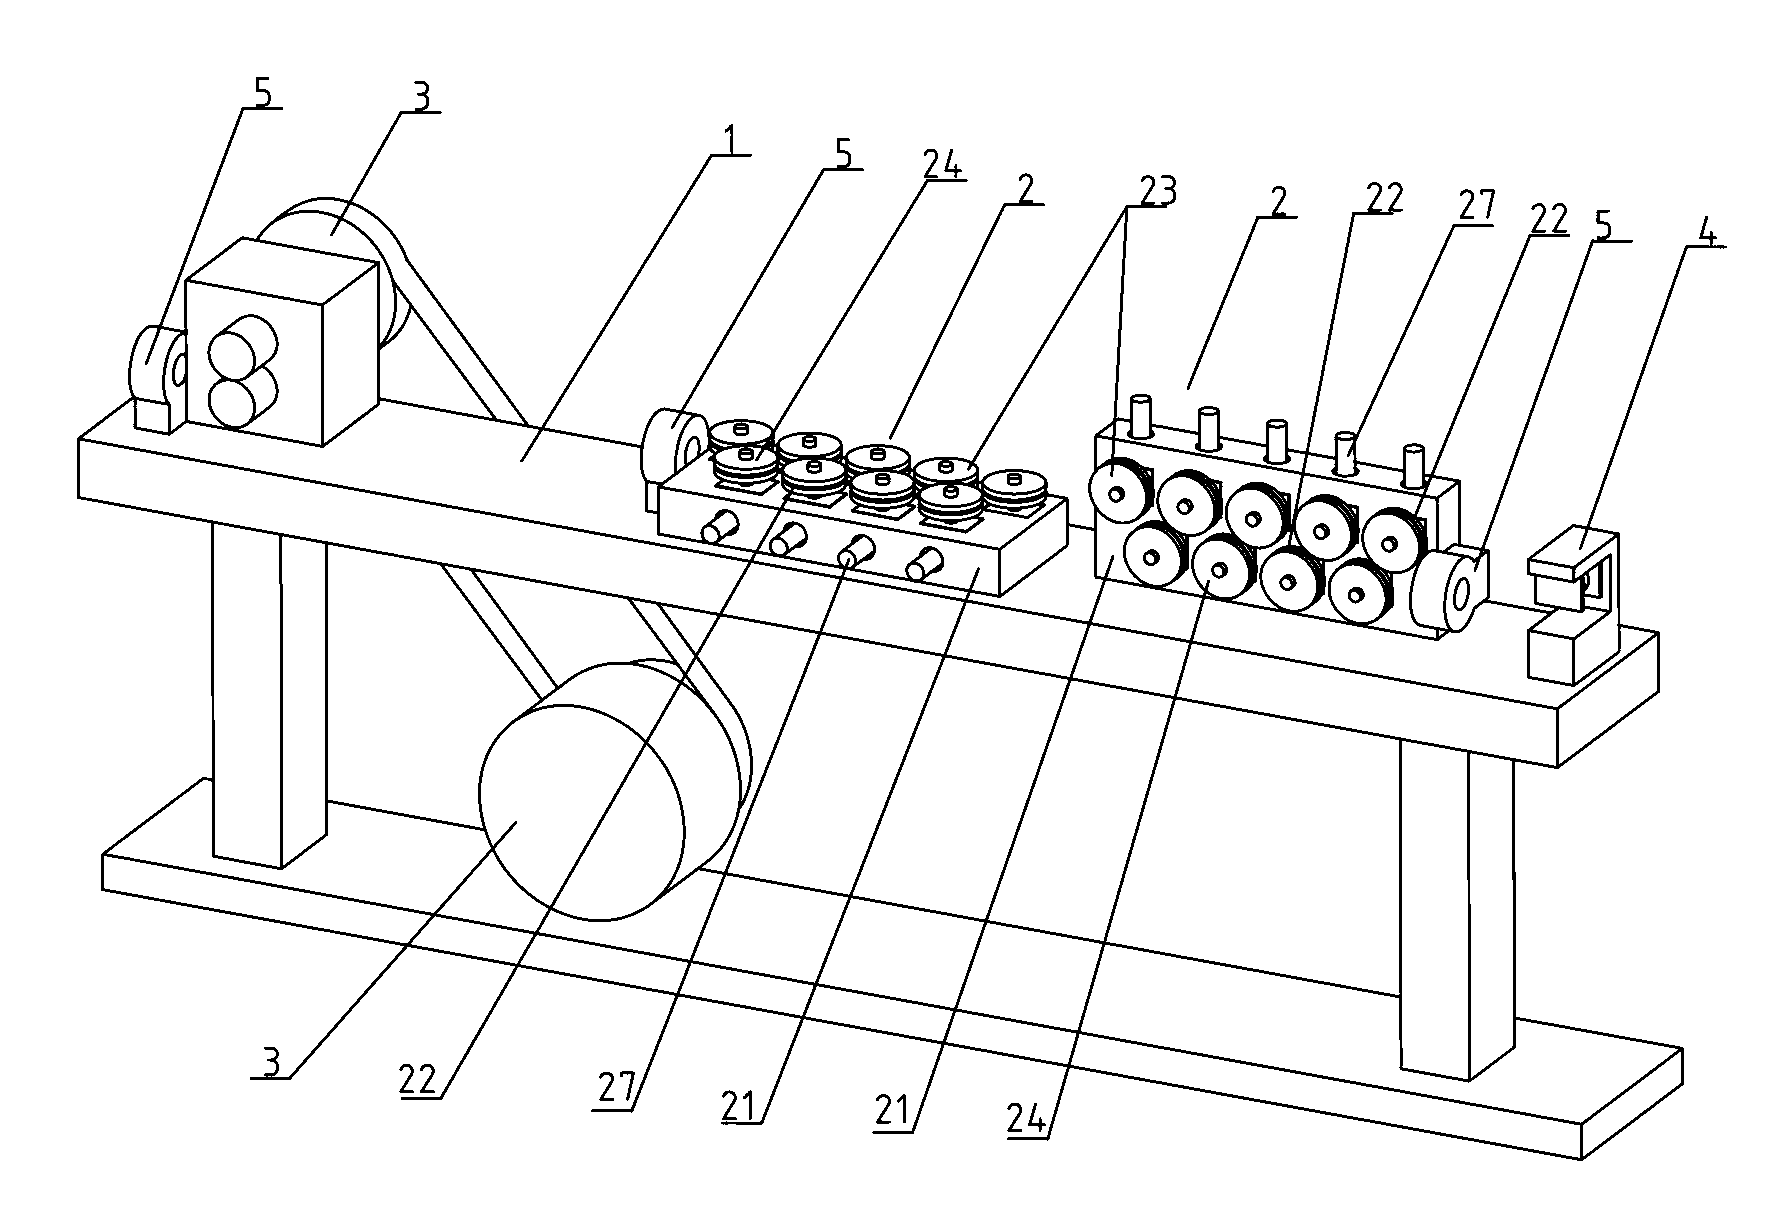 Wire adjusting mechanism of winding machine for winding fan housing